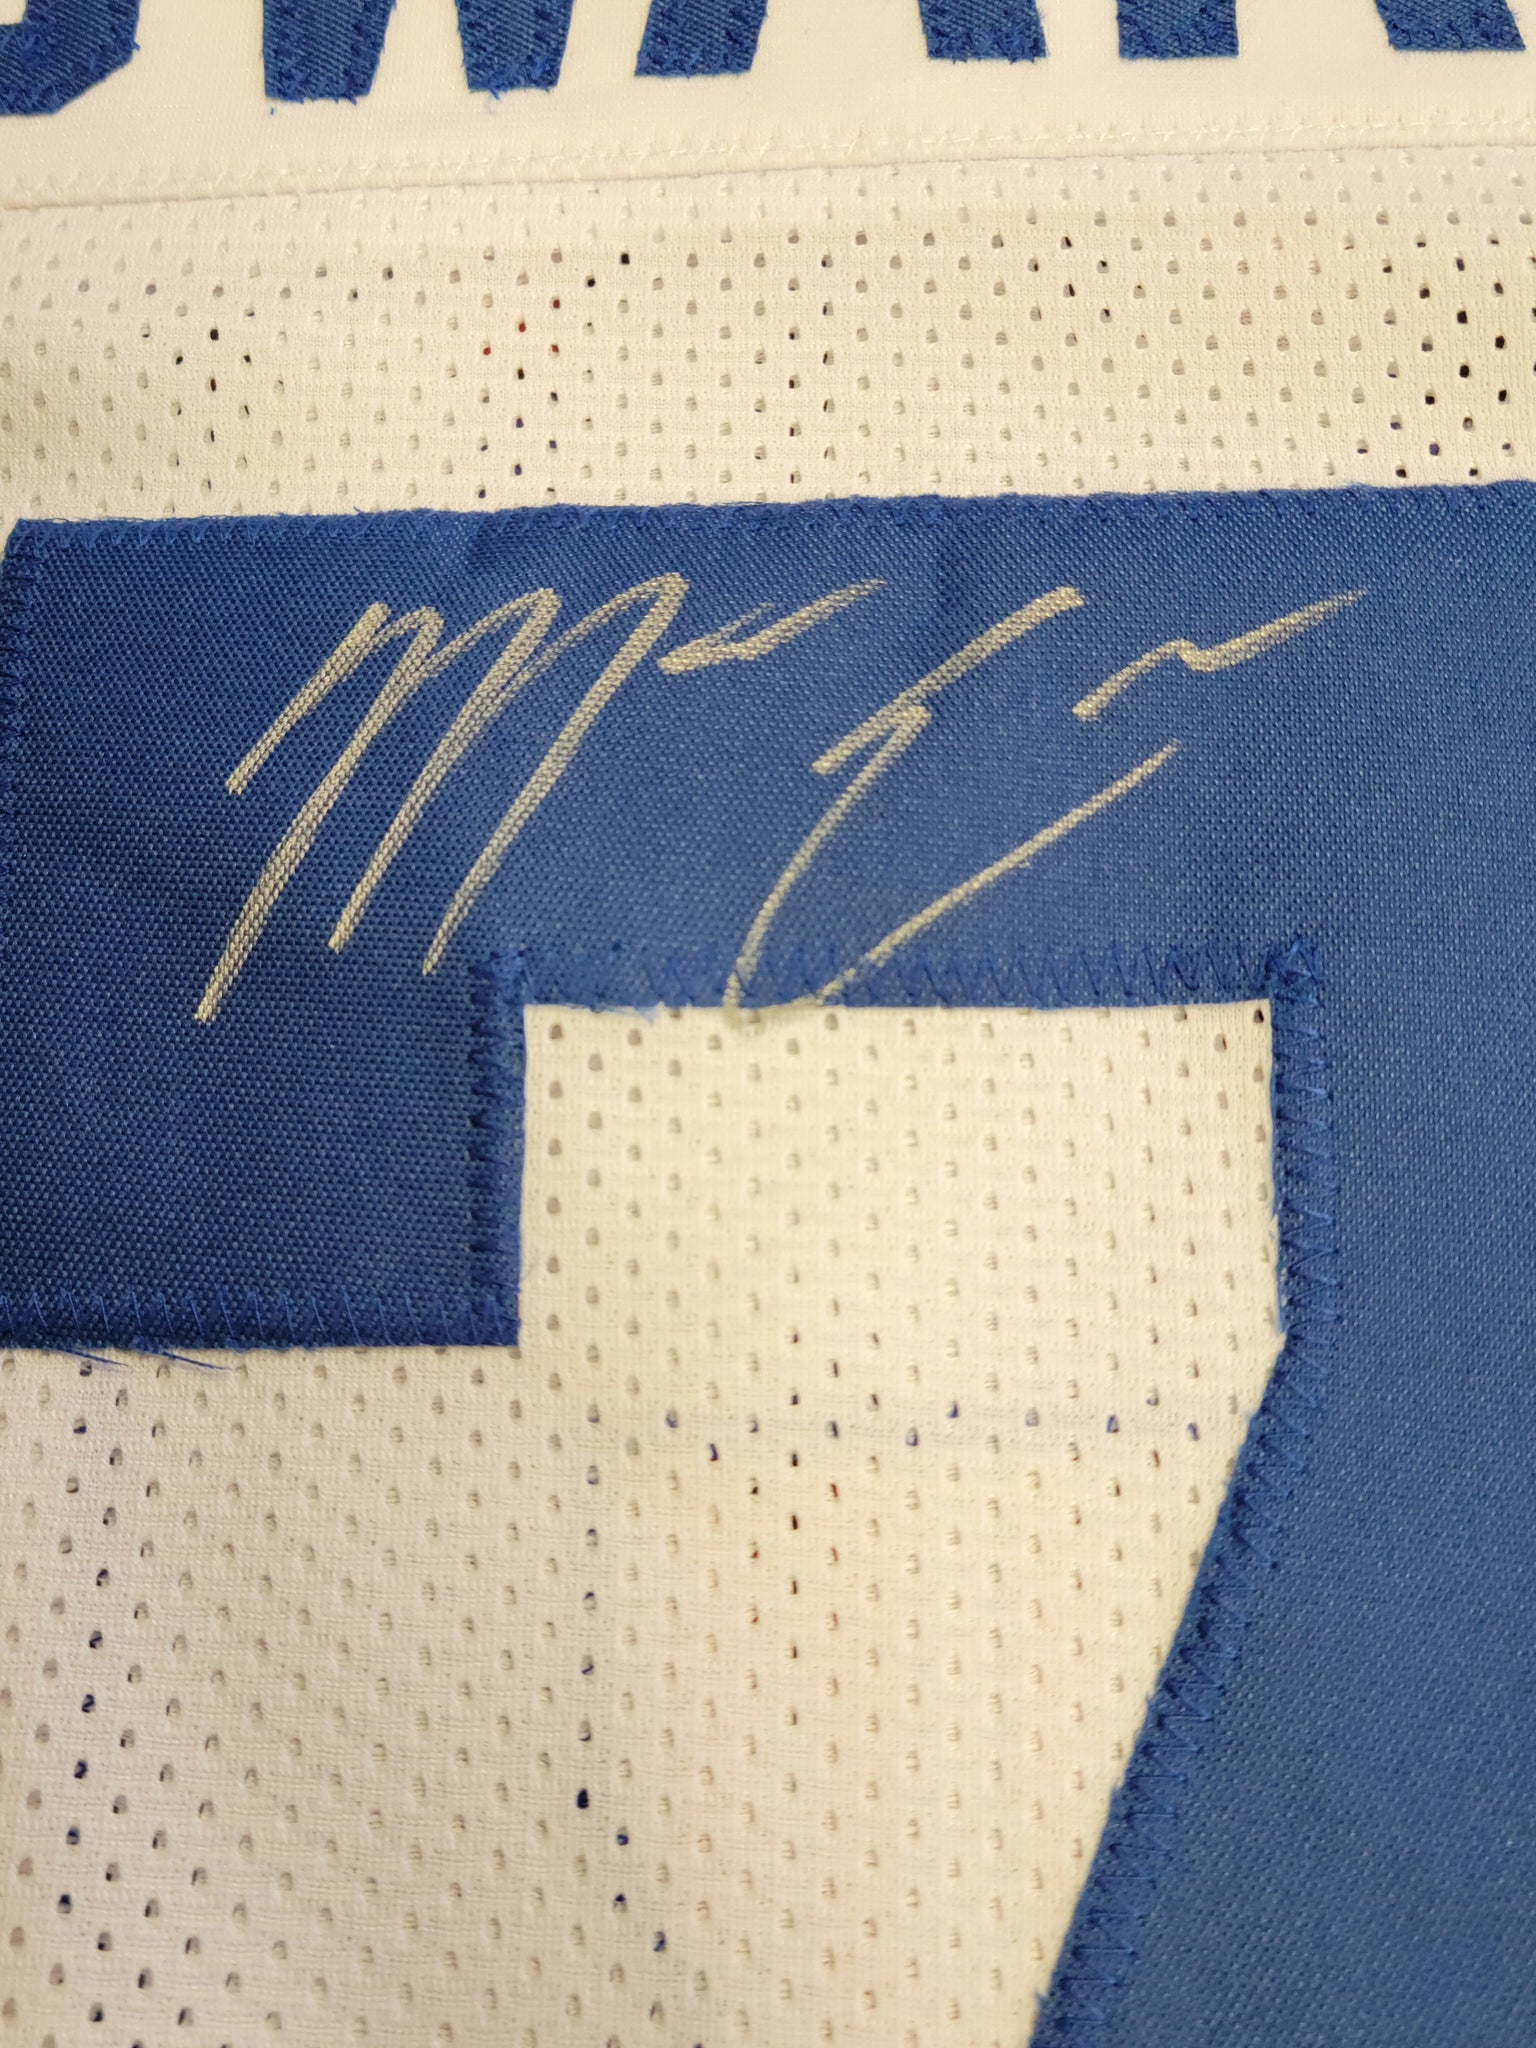 Rickey Henderson Signed Custom Yellow Pro-Style Baseball Jersey JSA –  Sports Integrity